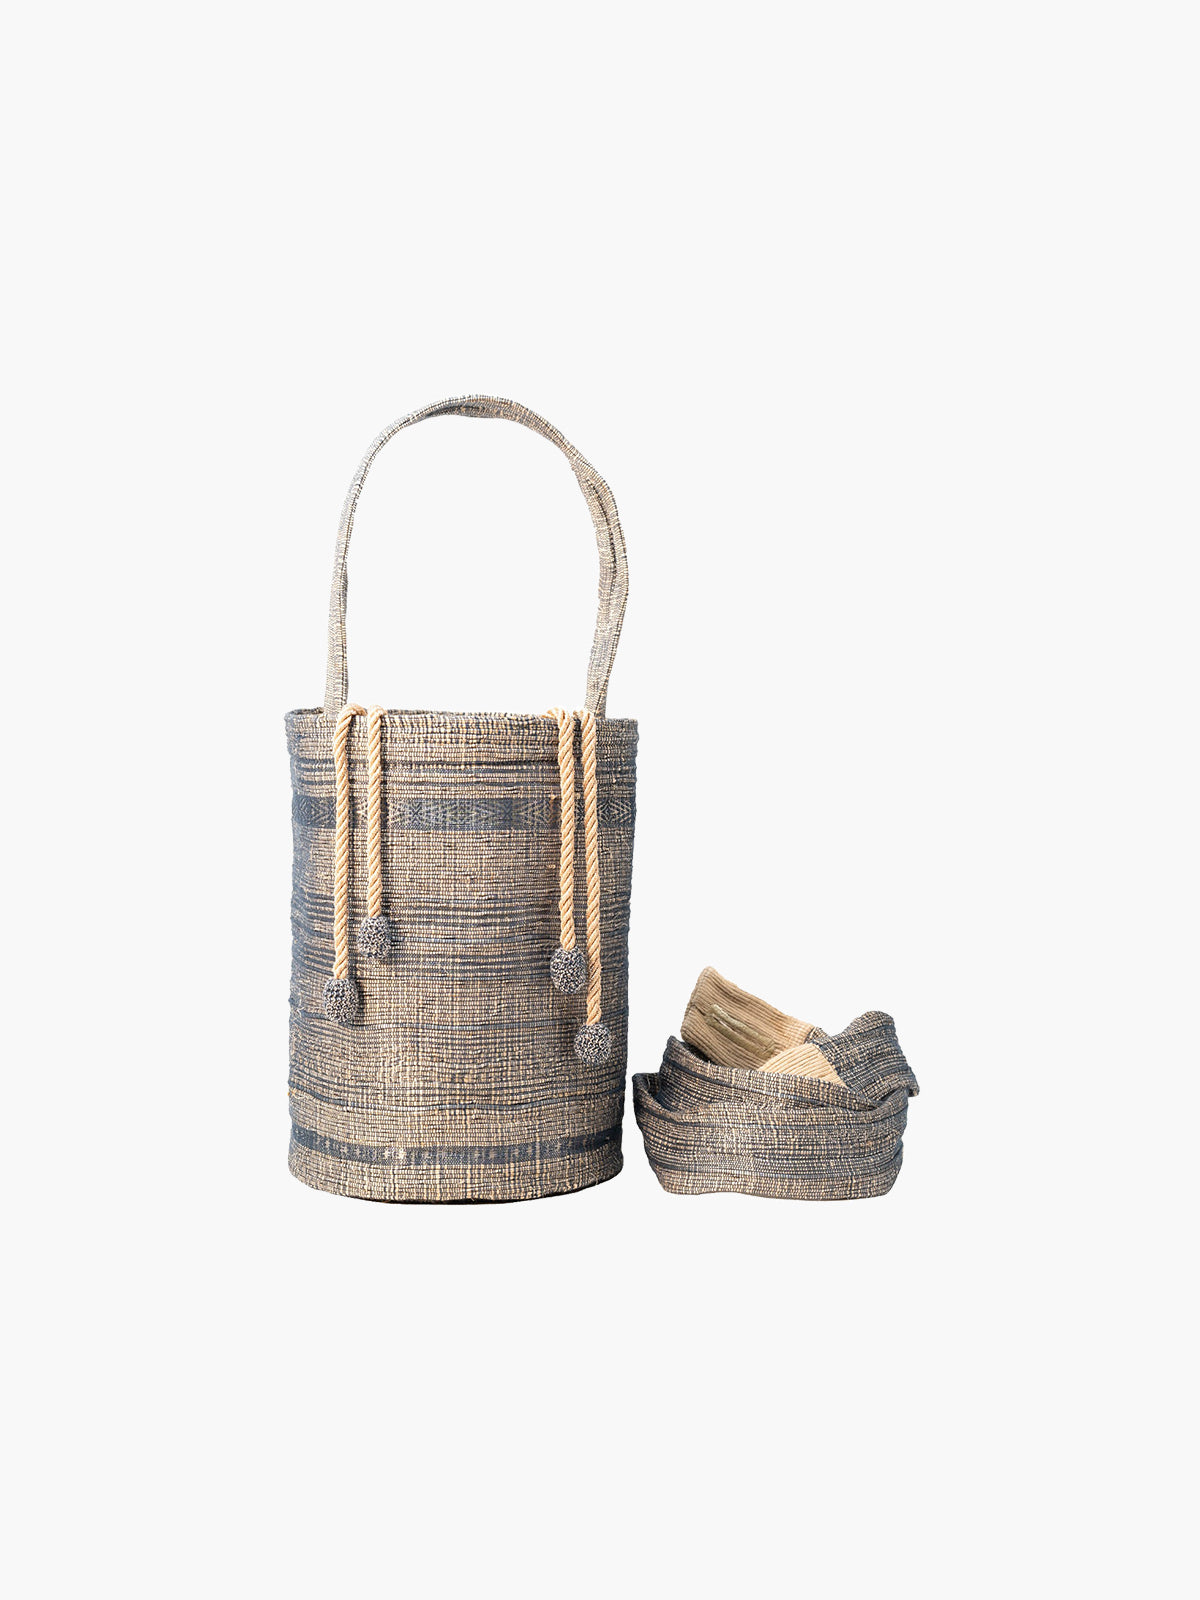 Bucket Bag | Navy & Stainless - Fashionkind